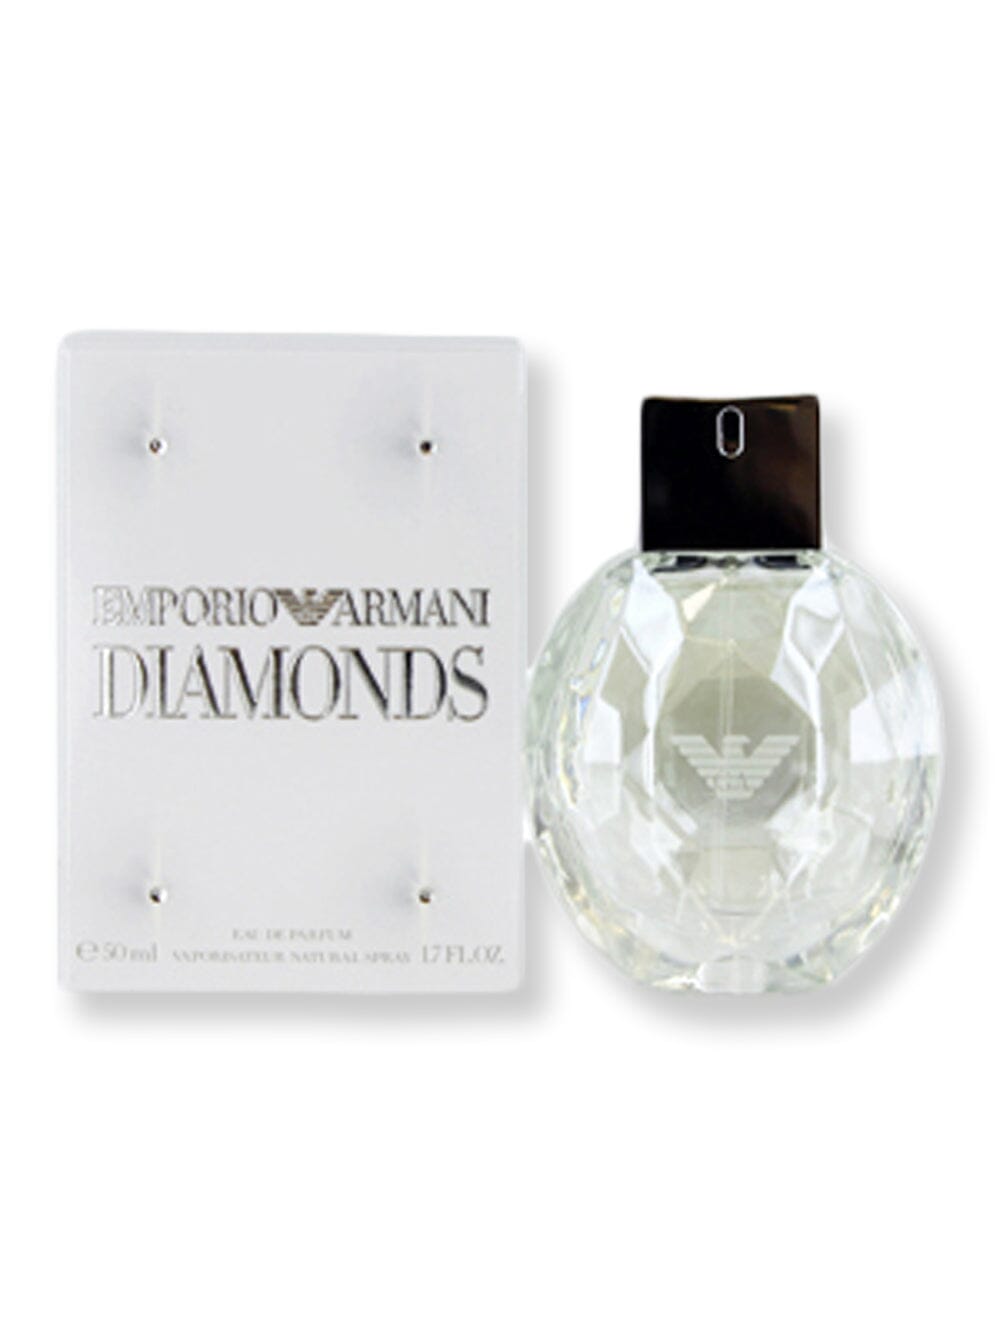 GIORGIO ARMANI GIORGIO ARMANI Emporio Diamonds EDP Spray 1.7 oz Perfume 